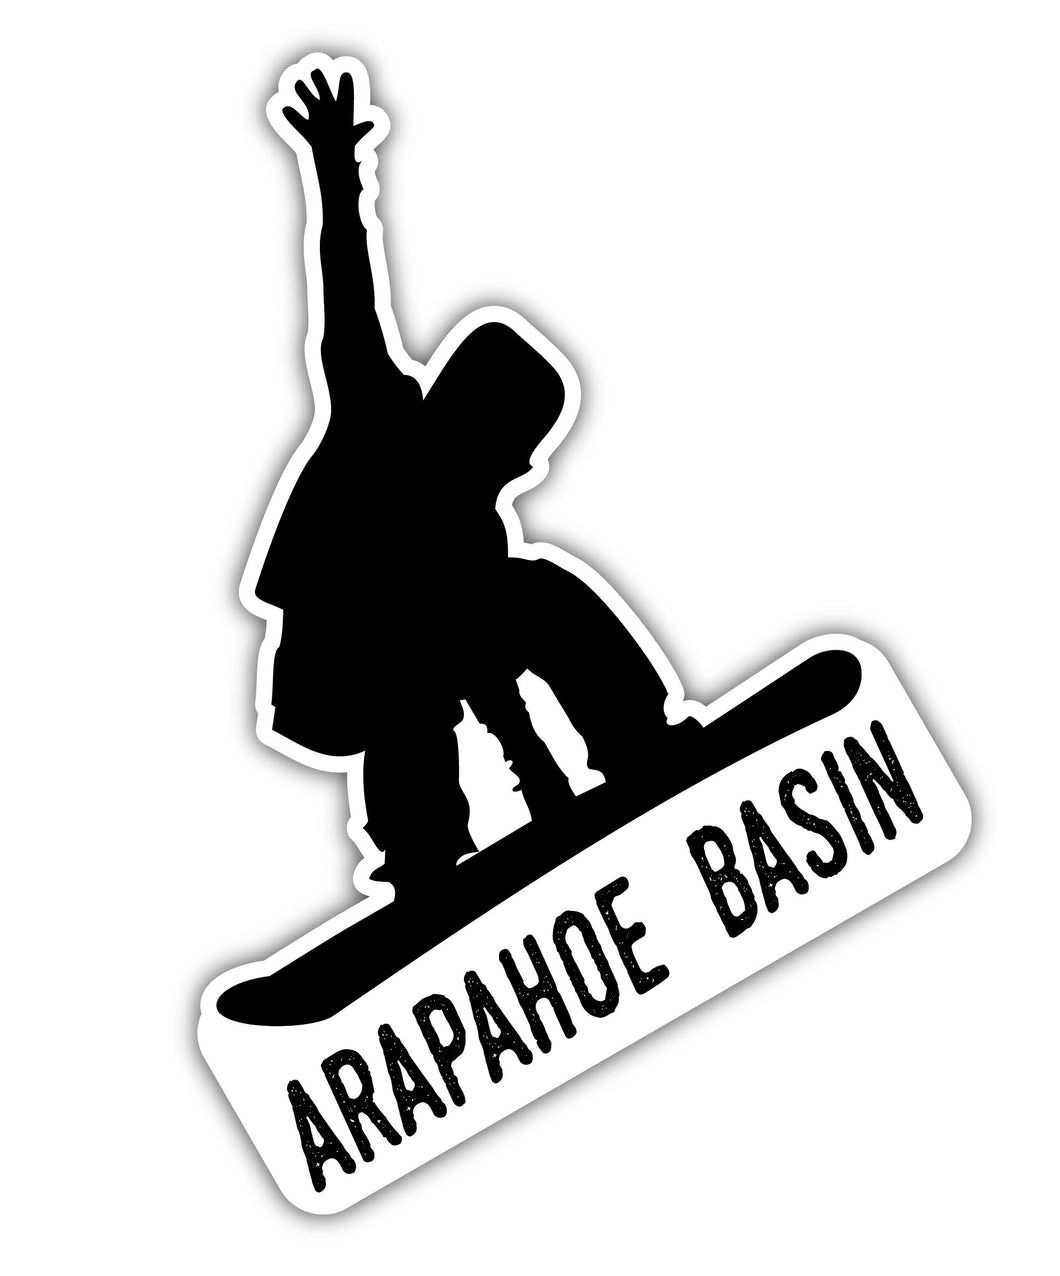 Arapahoe Basin Colorado Ski Adventures Souvenir Approximately 5 x 2.5-Inch Vinyl Decal Sticker Goggle Design